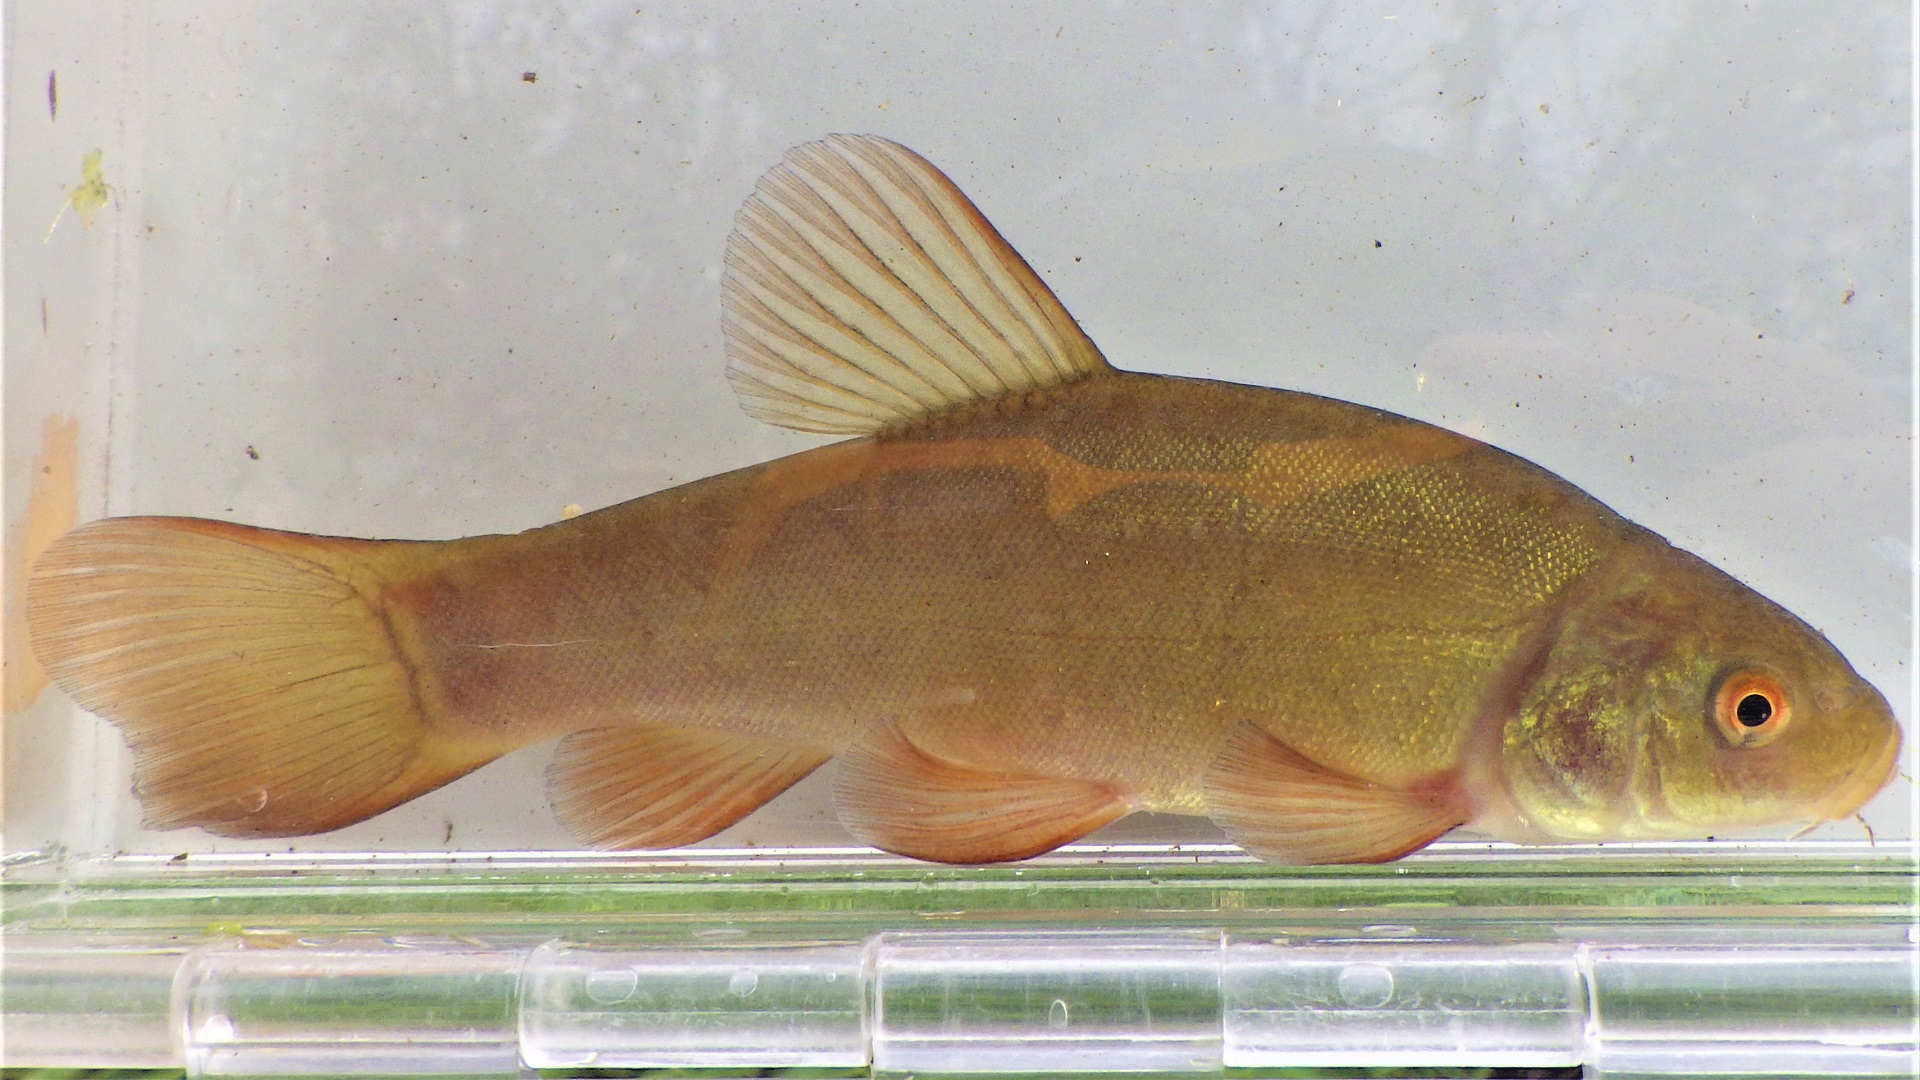 A large fish in a photarium